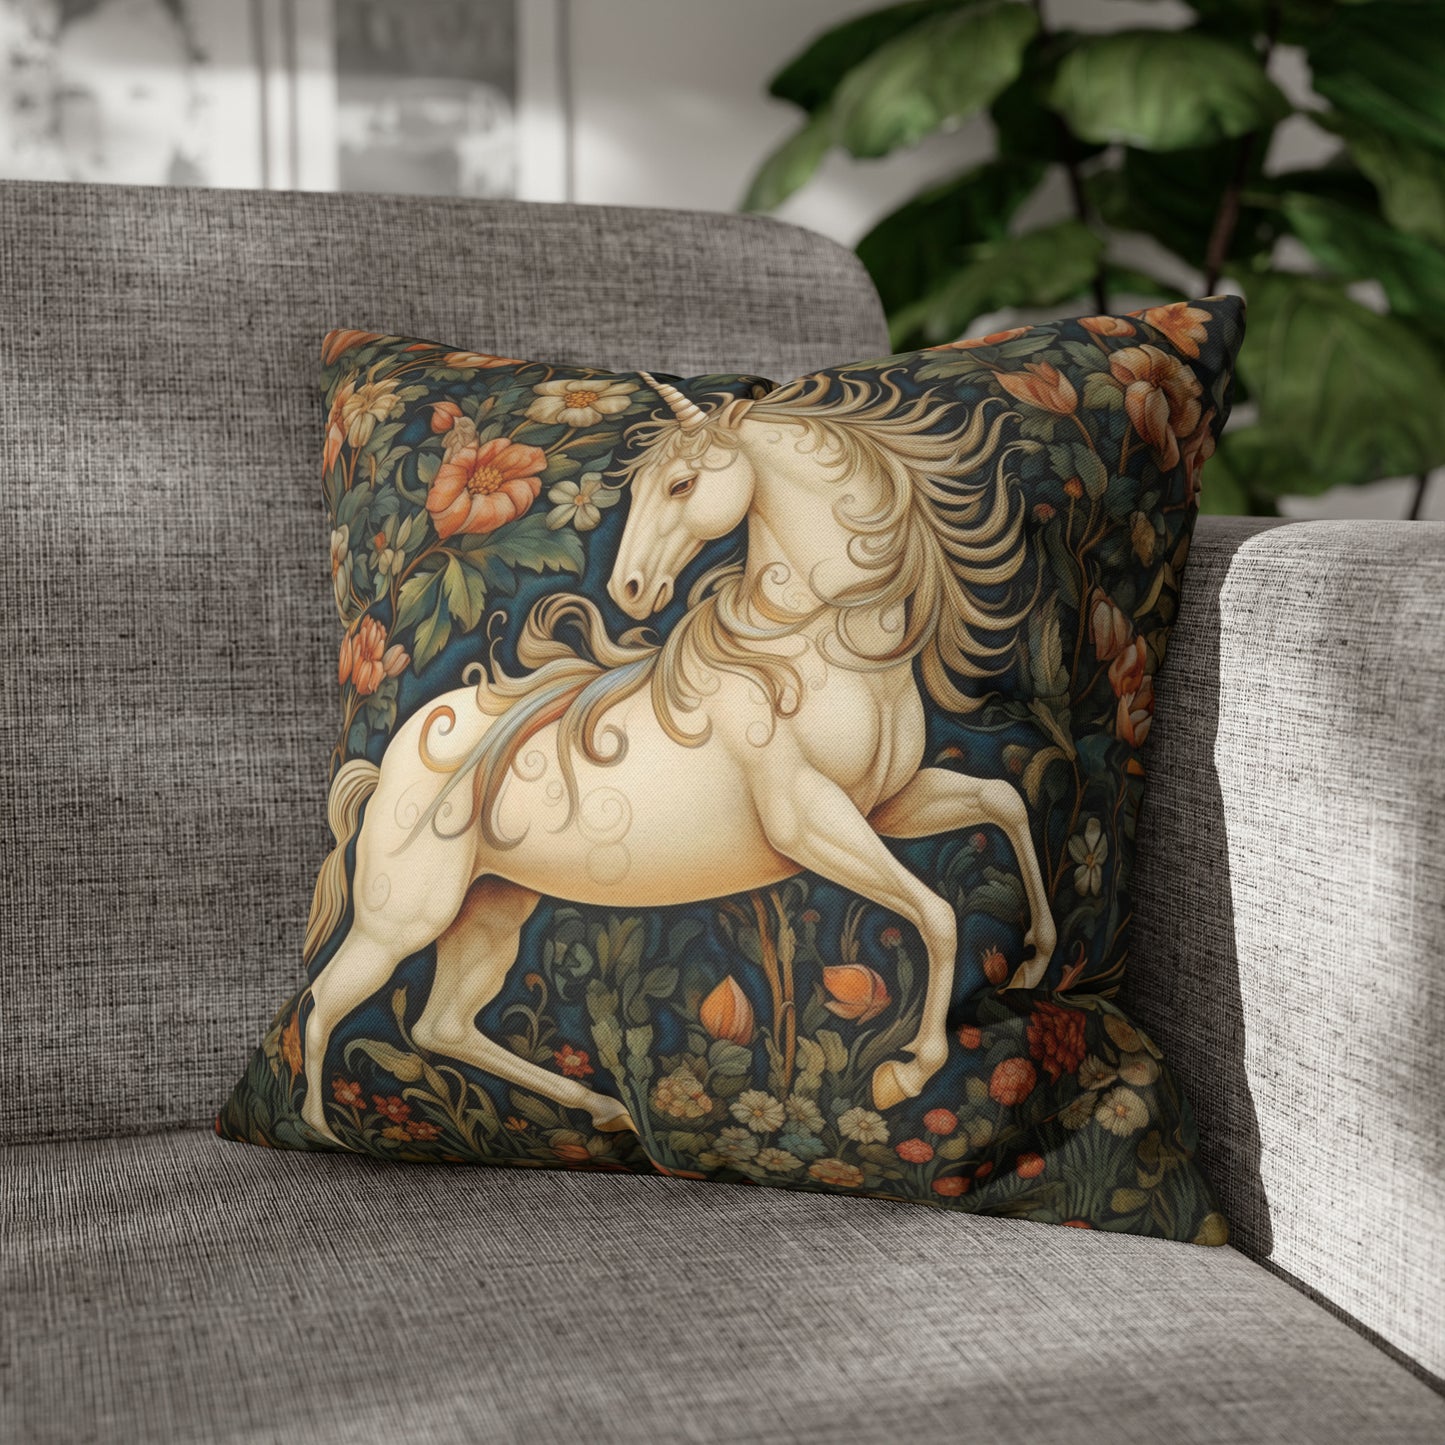 Floral Unicorn in Garden Digital Art Download